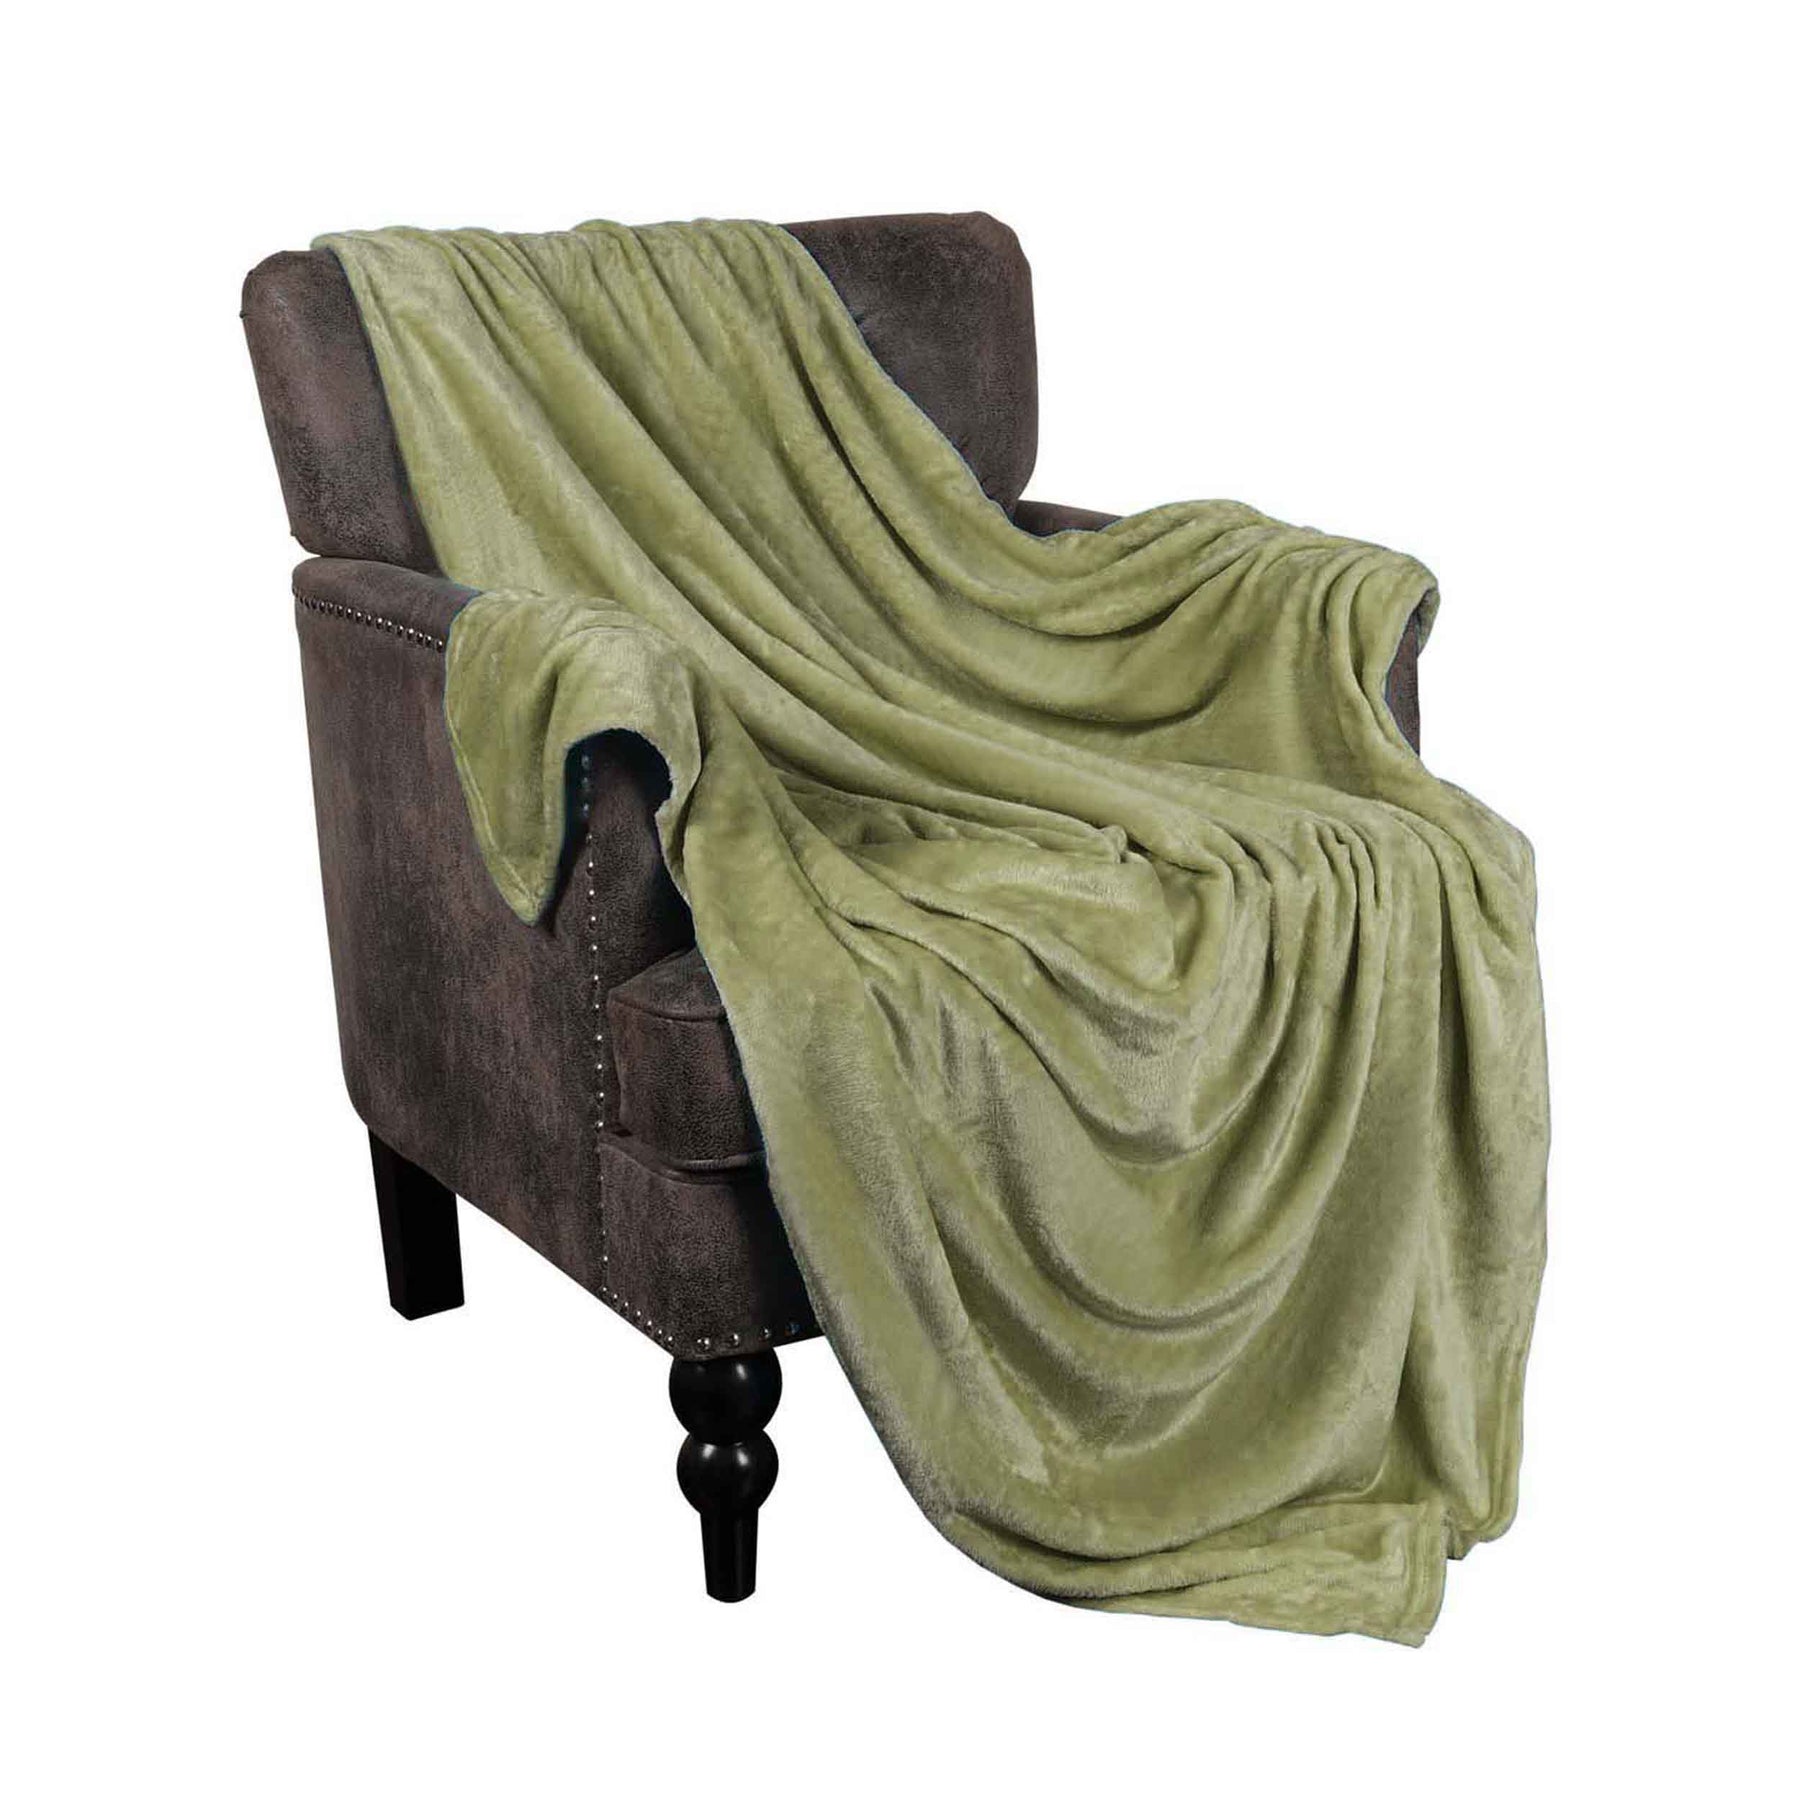 Fleece Plush Medium Weight Fluffy Soft Decorative Blanket Or Throw - Sage